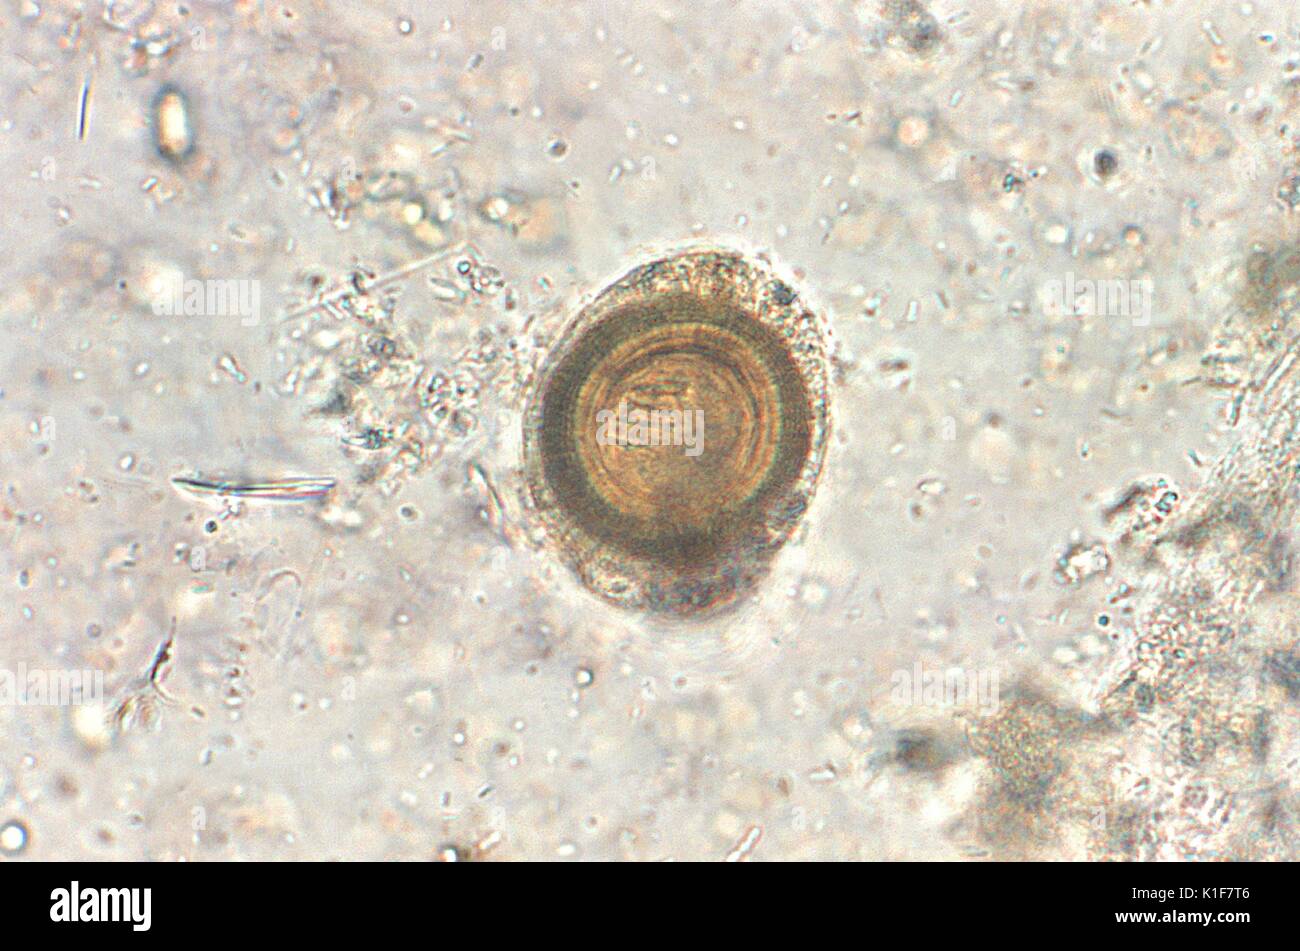 Egg of Taenia sp. Hooklets visible. Tapeworm, cestode, parasite. Image courtesy CDC/Dr. Mae Melvin, 1979. Stock Photo